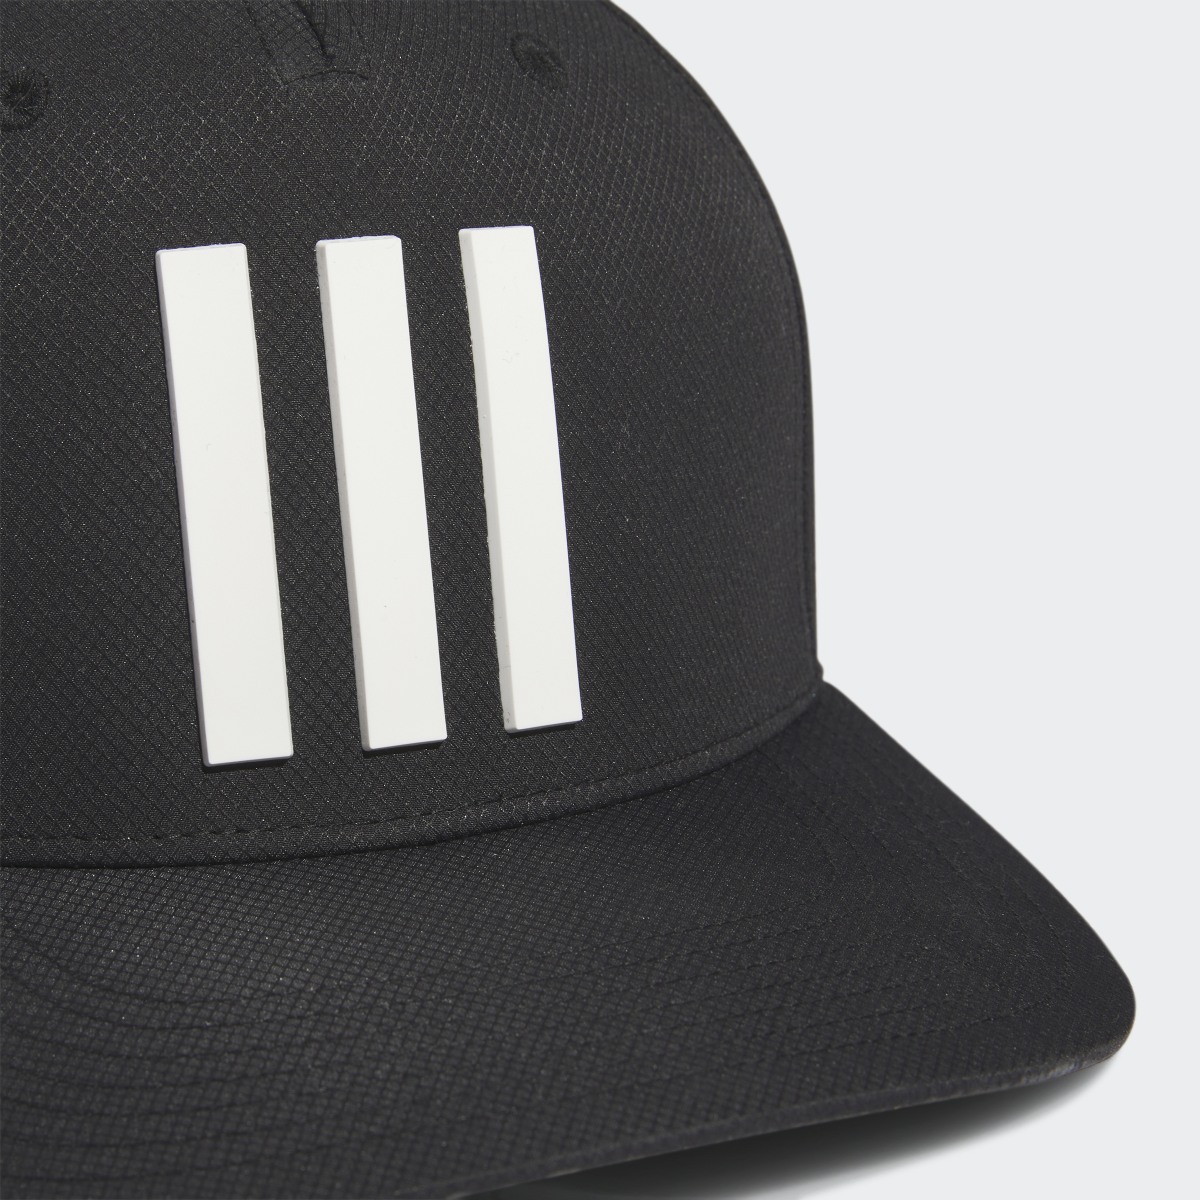 Adidas 3-Stripes Tour Hat. 4